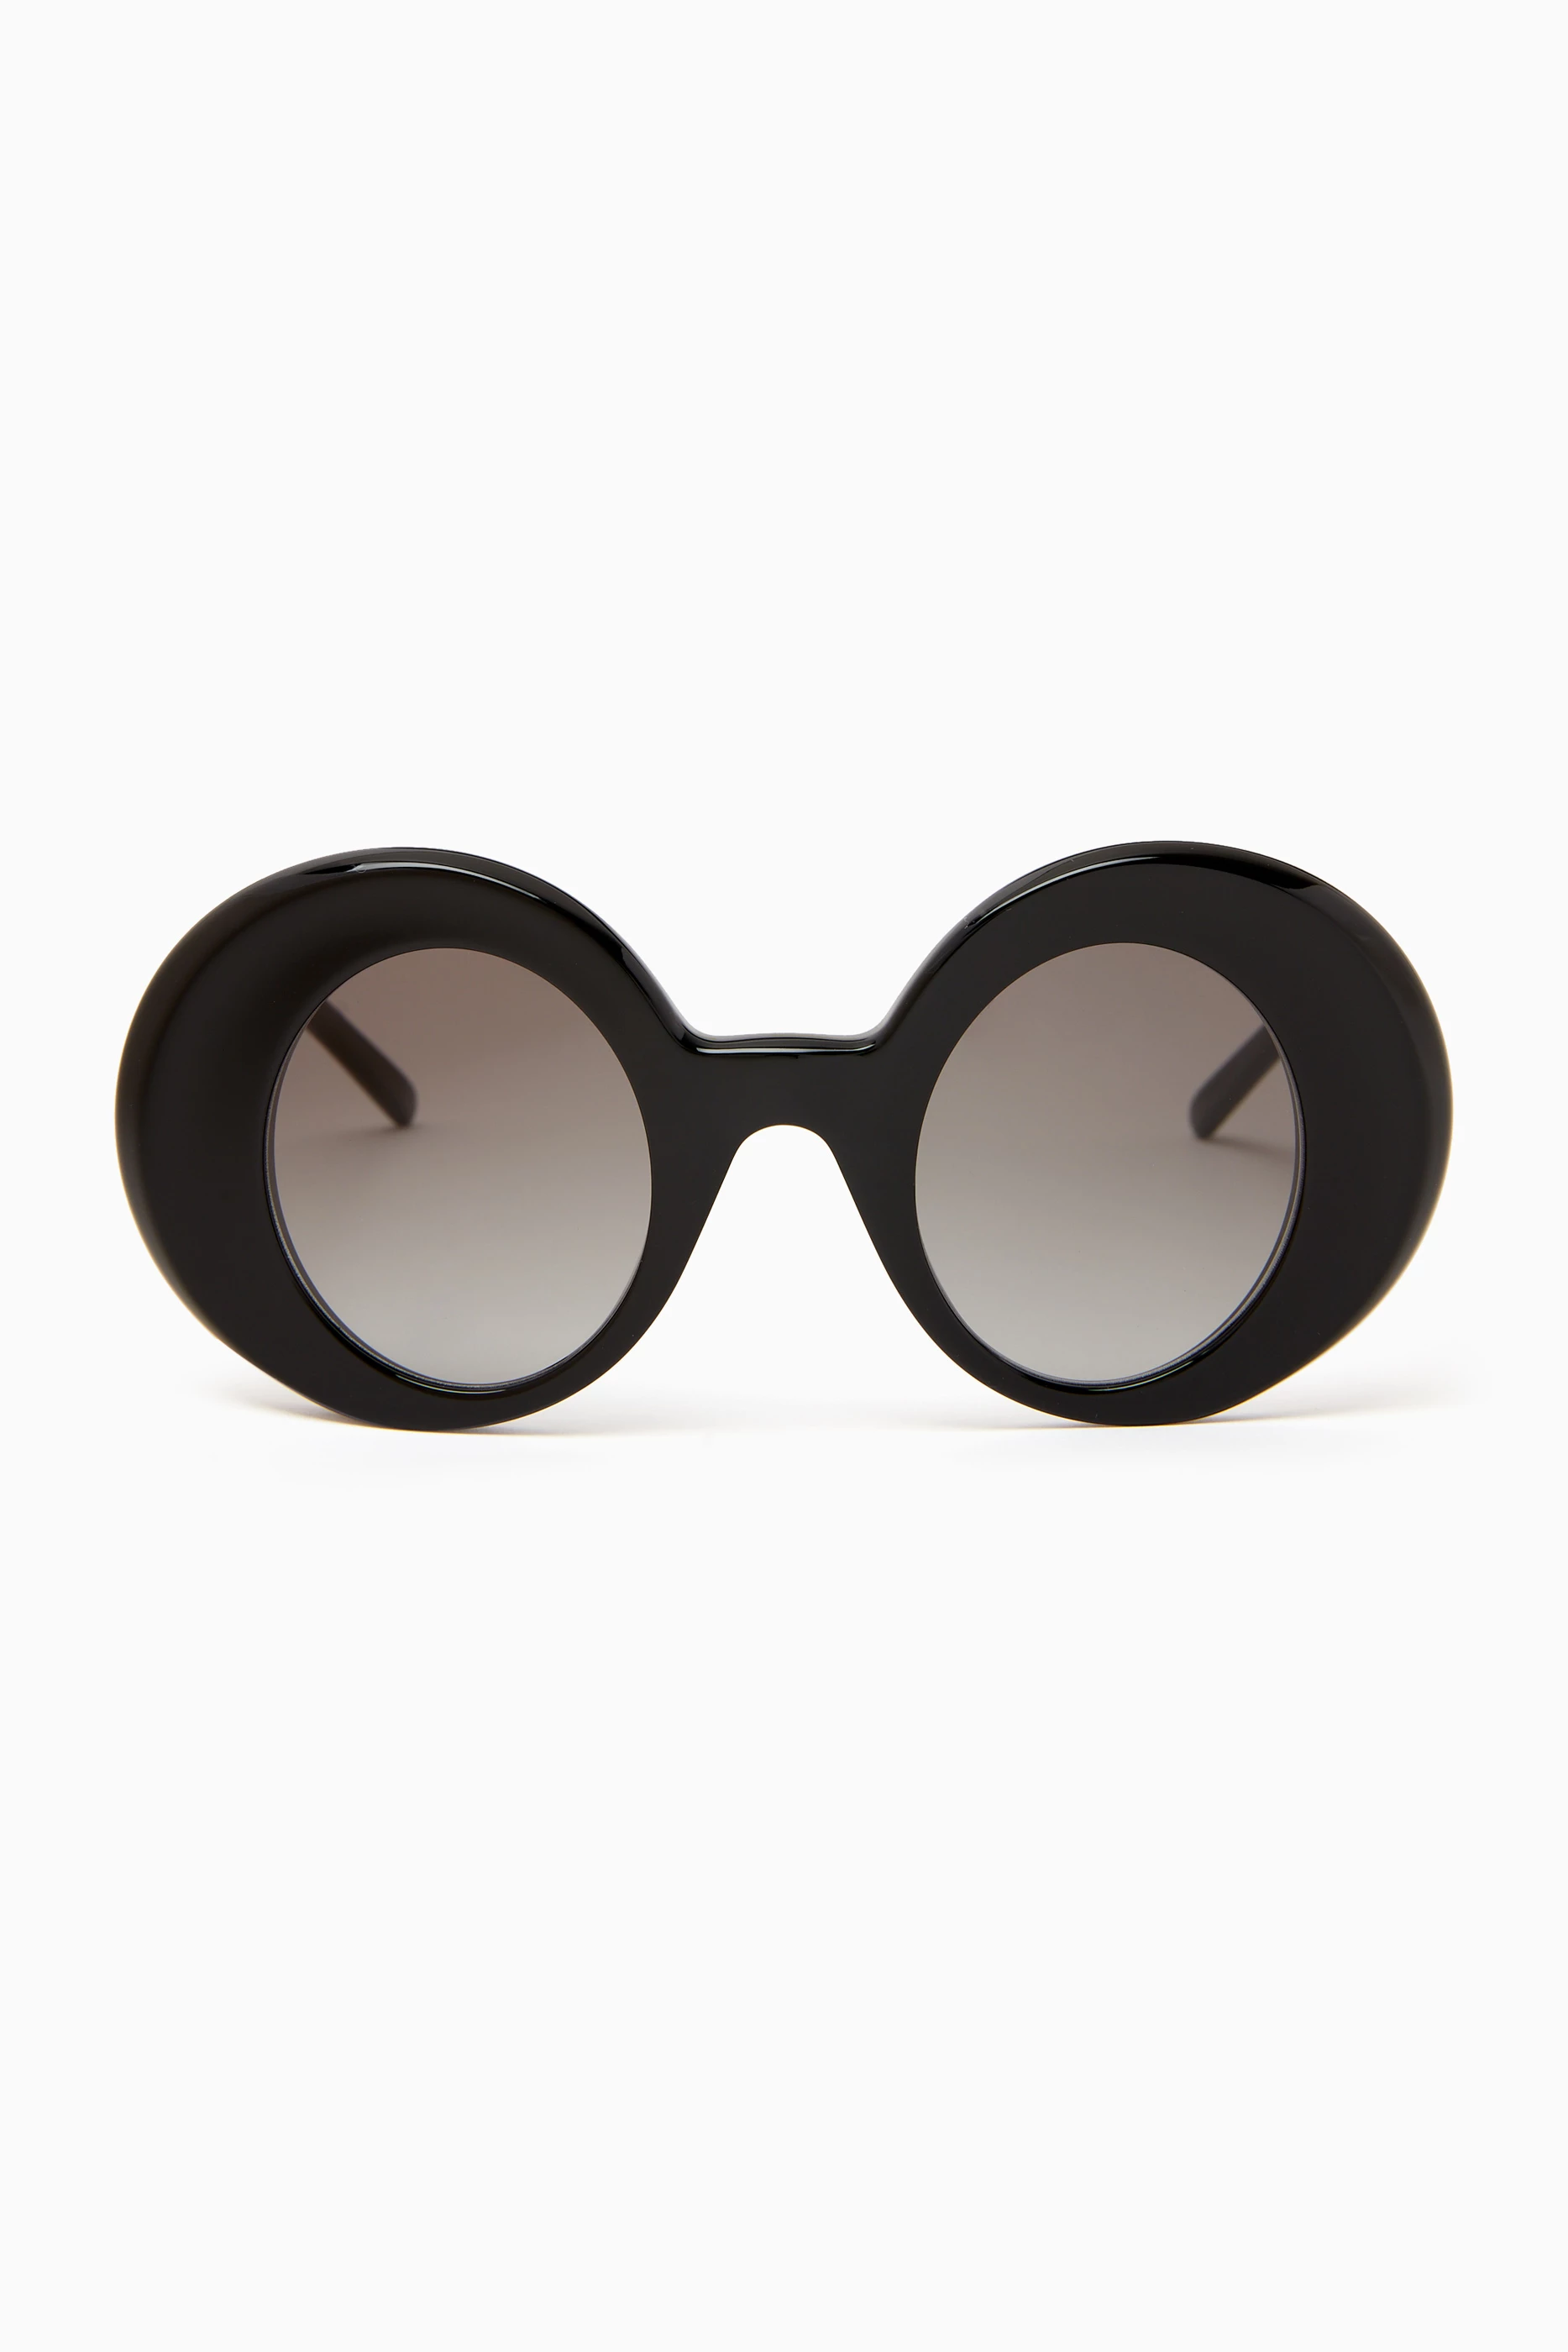 Buy LOEWE Black Round Sunglasses in Acetate for WOMEN in Saudi